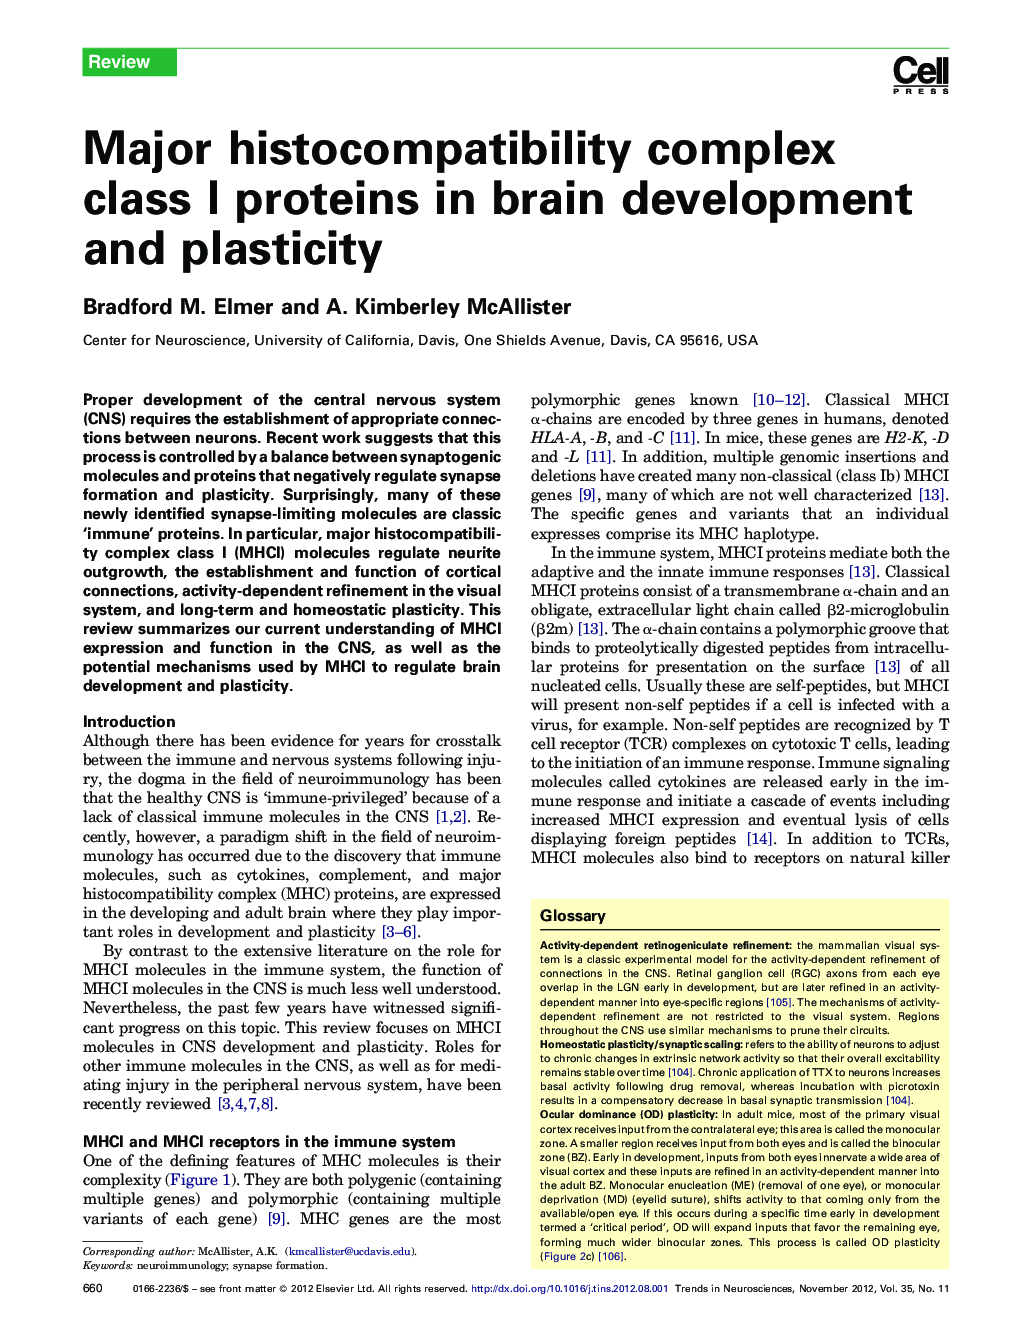 Major histocompatibility complex class I proteins in brain development and plasticity